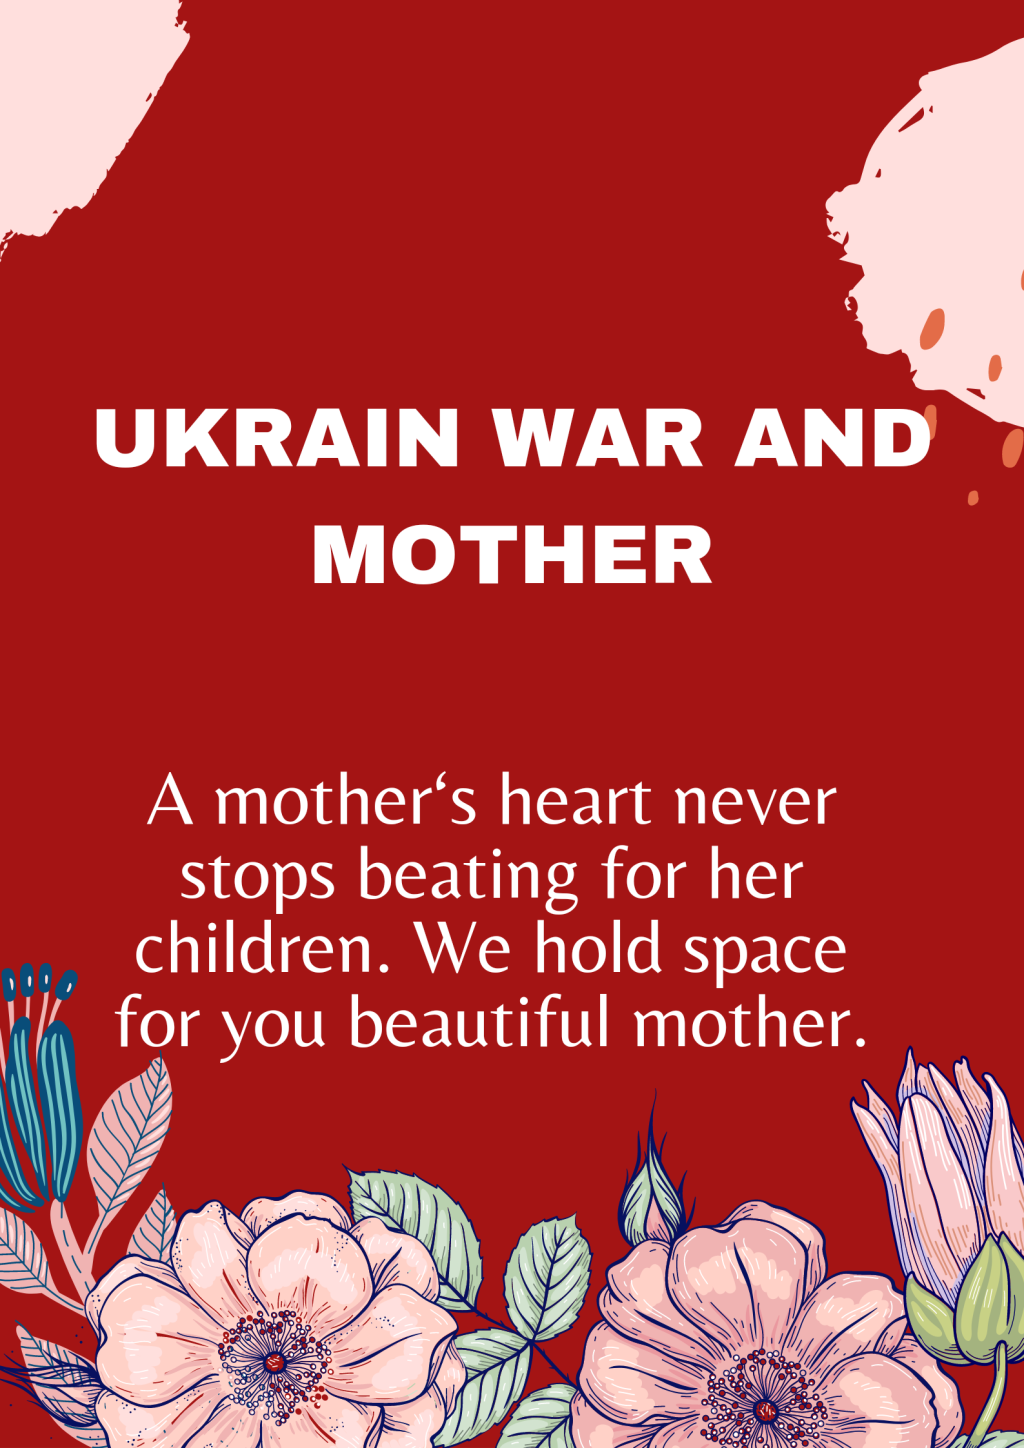 UKRAINE WAR AND MOTHERS